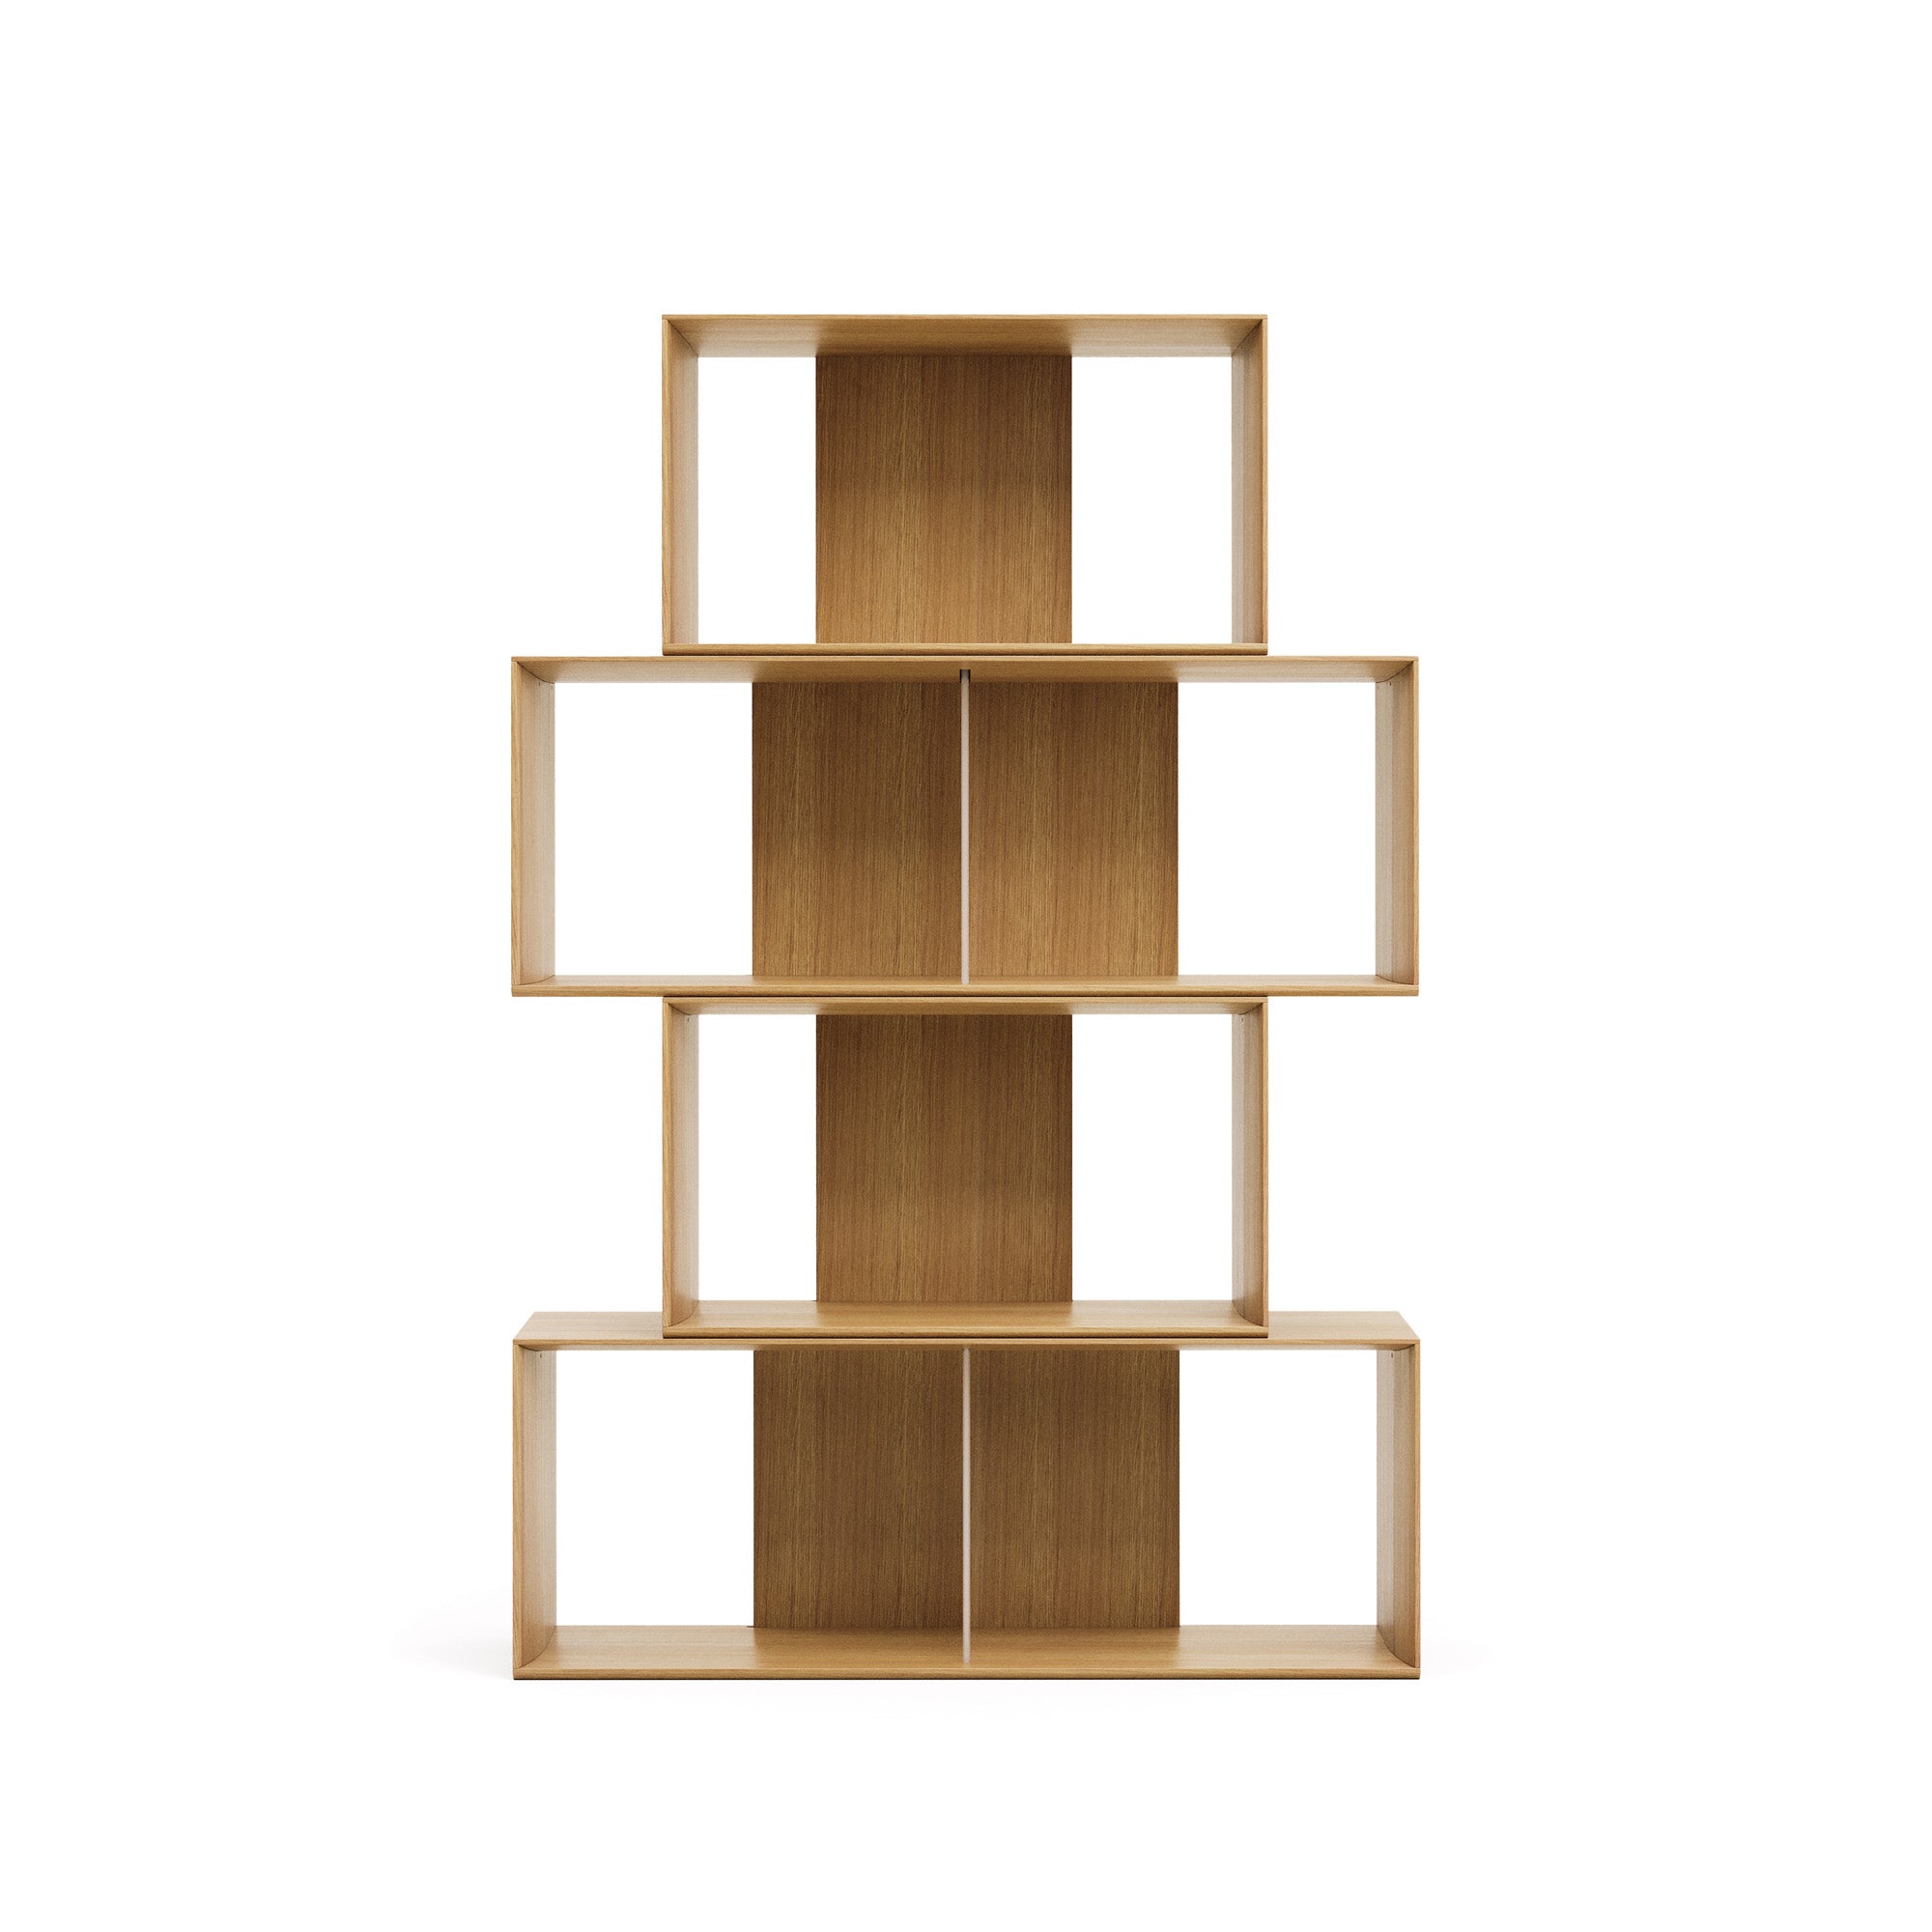 Litto set of 4 modular shelving units in oak wood veneer, 168 x 76 cm